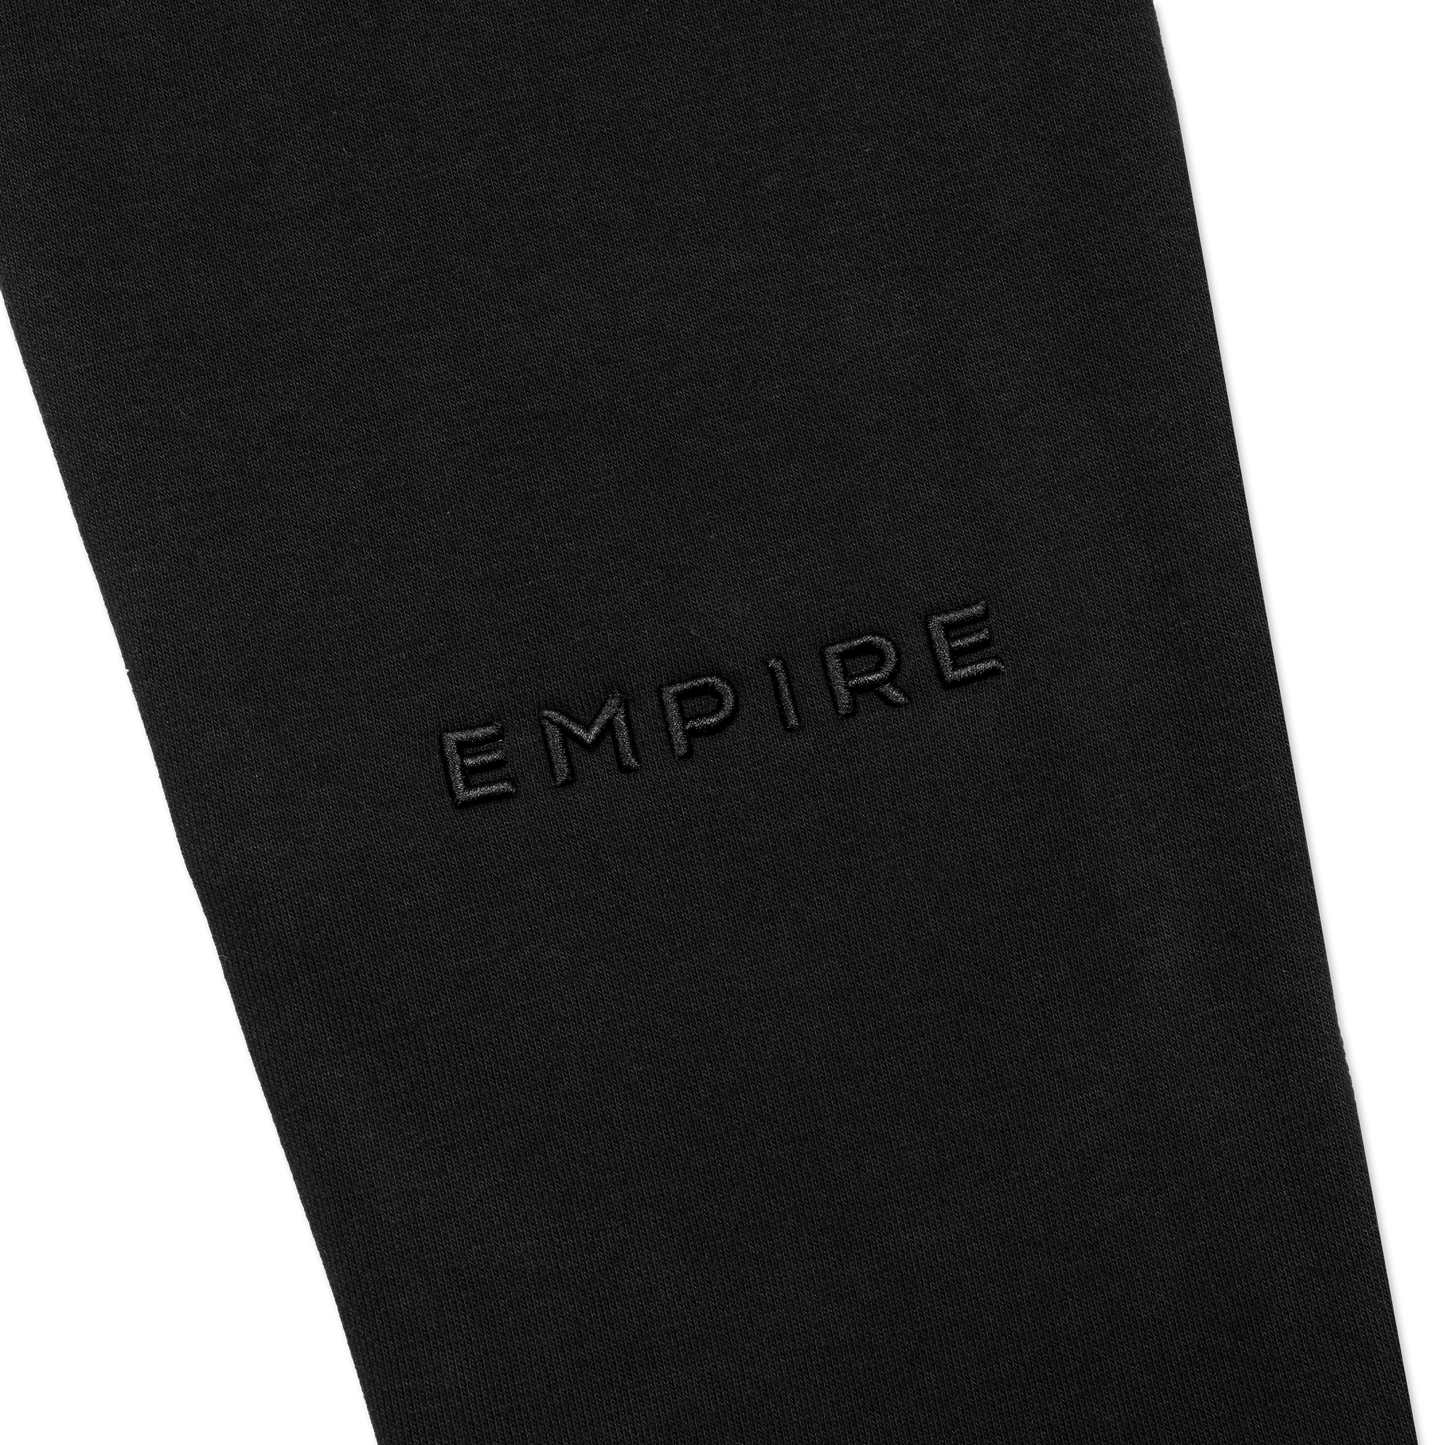 EMPIRE - Staple Sweats (Tonal Black)